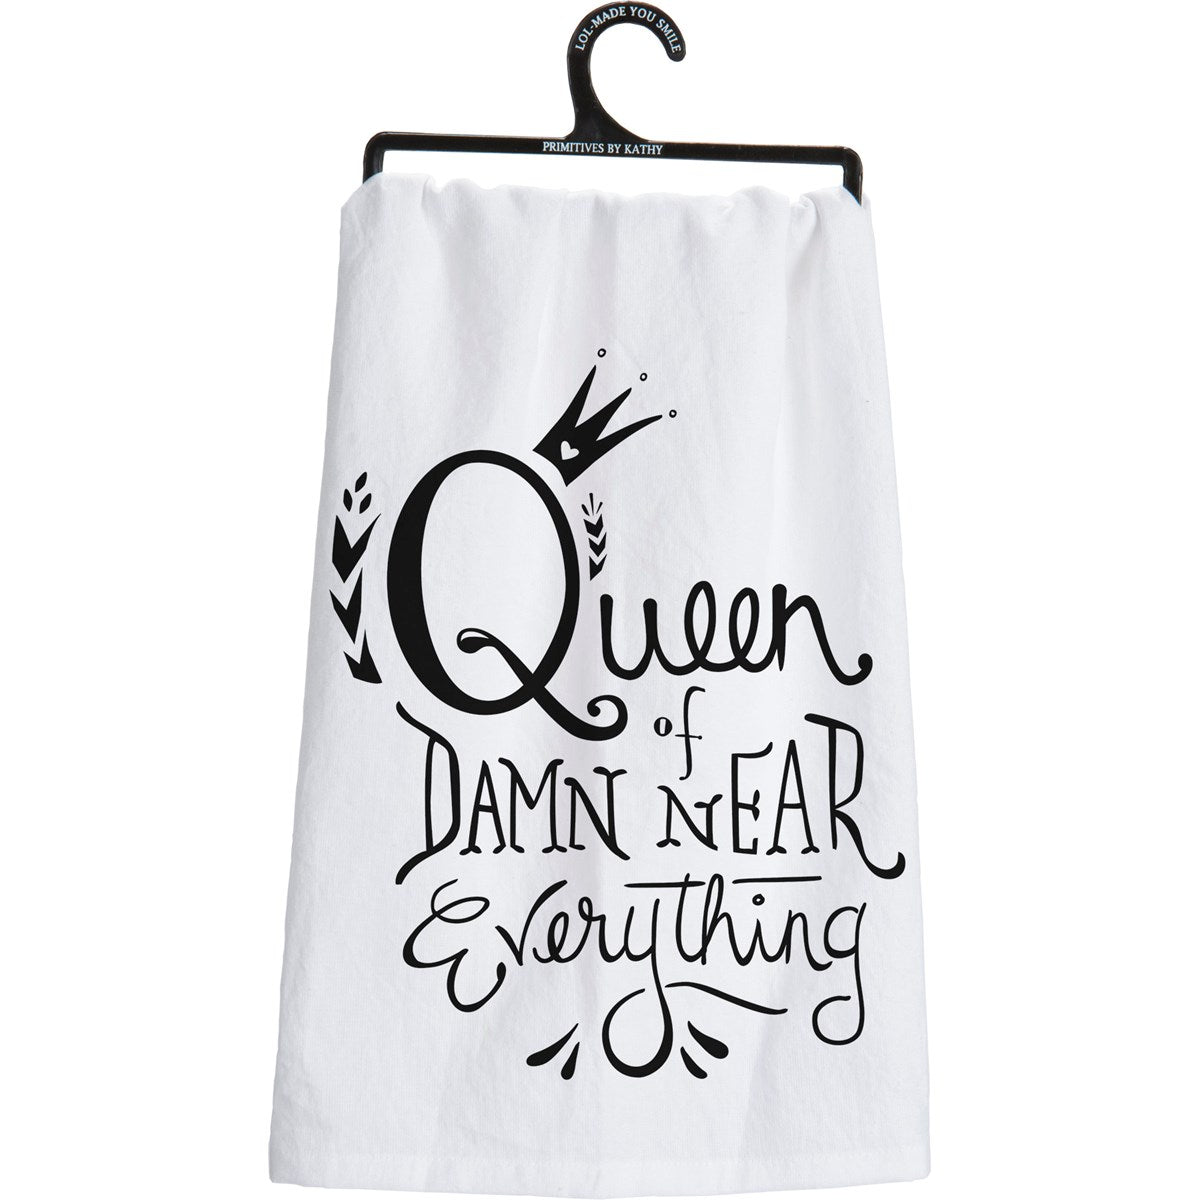 "QUEEN OF DAMN NEAR EVERYTHING" DISH TOWEL